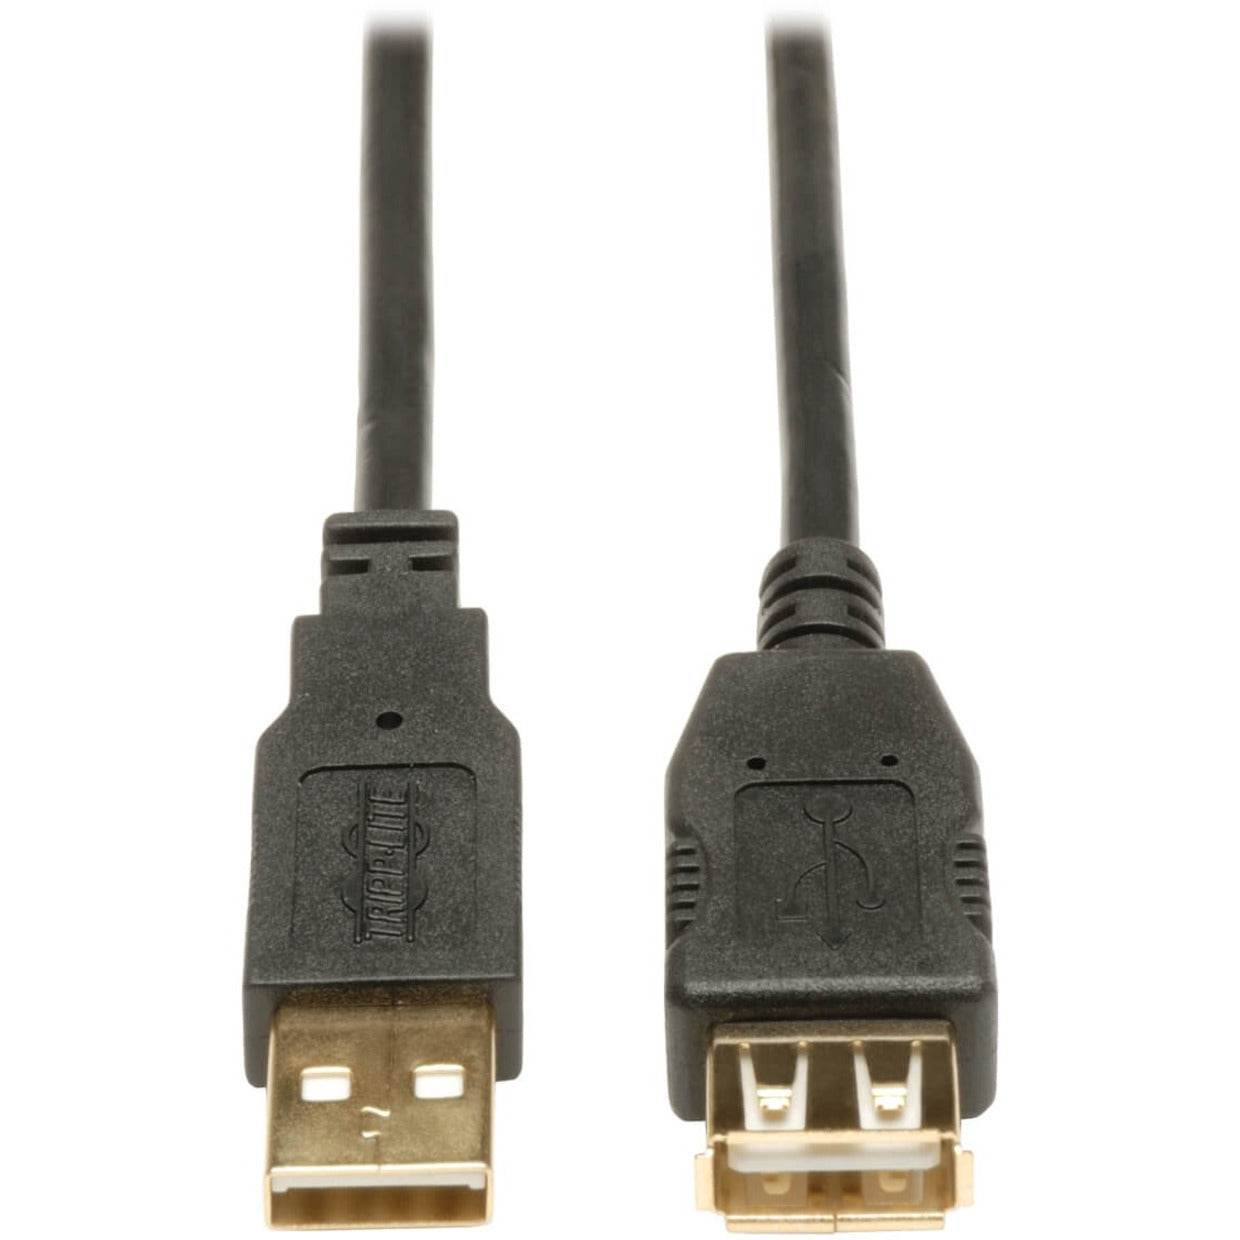 Tripp Lite U024-016 16-ft. USB 2.0 金延长电缆 (USB A M/F) 成型 铜导线 屏蔽 黑色 品牌: Tripp Lite 将品牌名称翻译如下: 崔普莱特